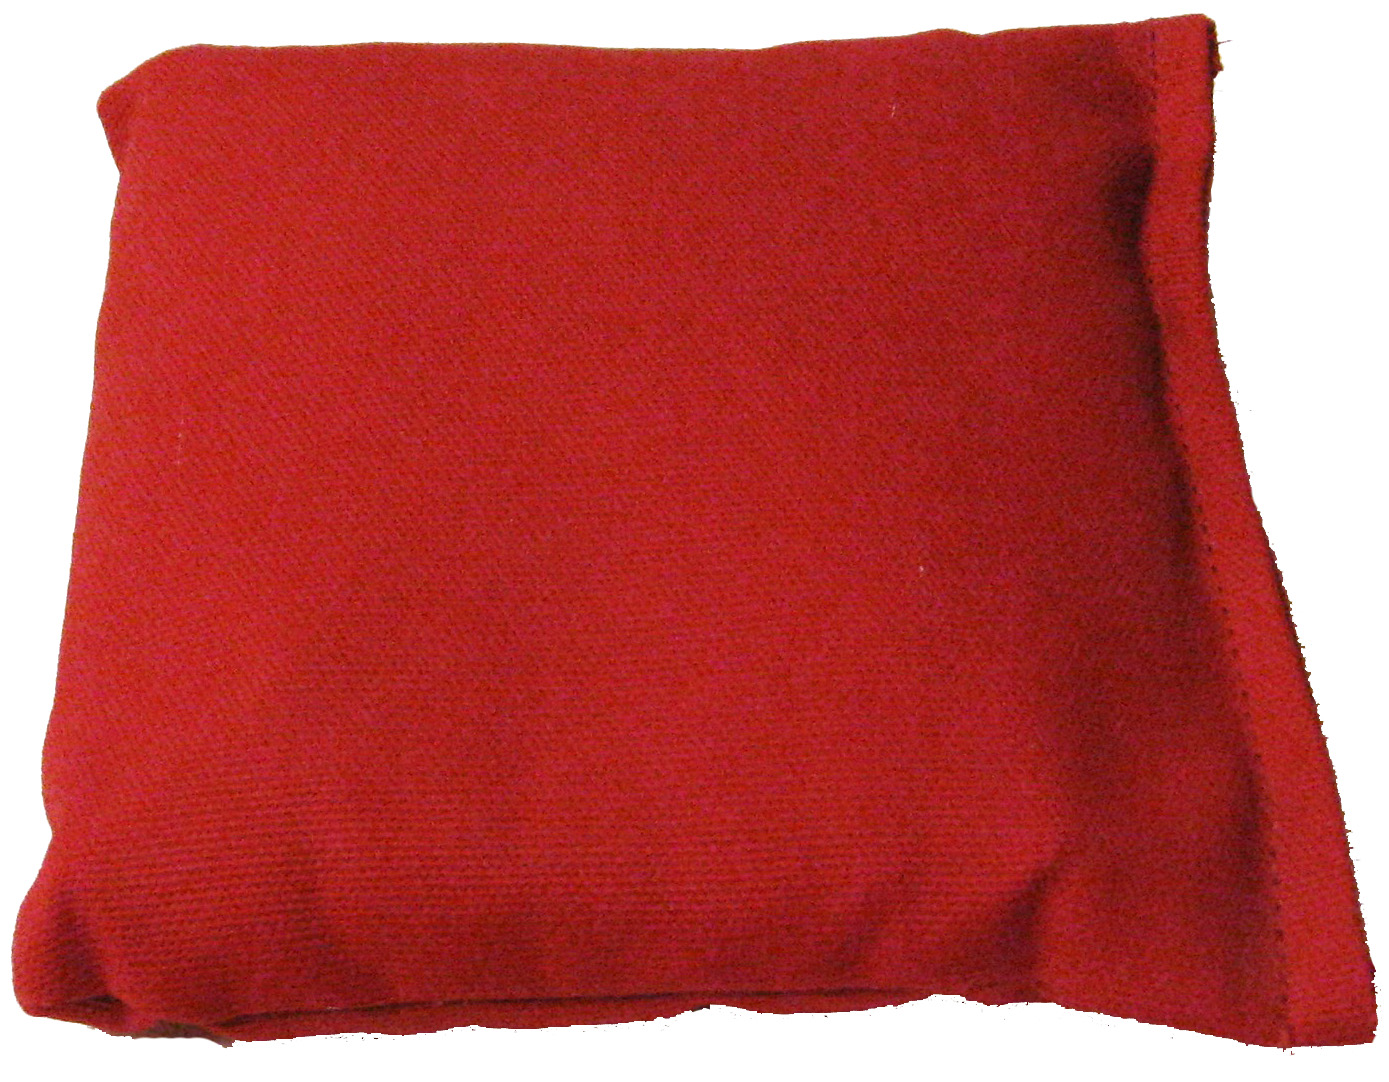 Red Bean Bag